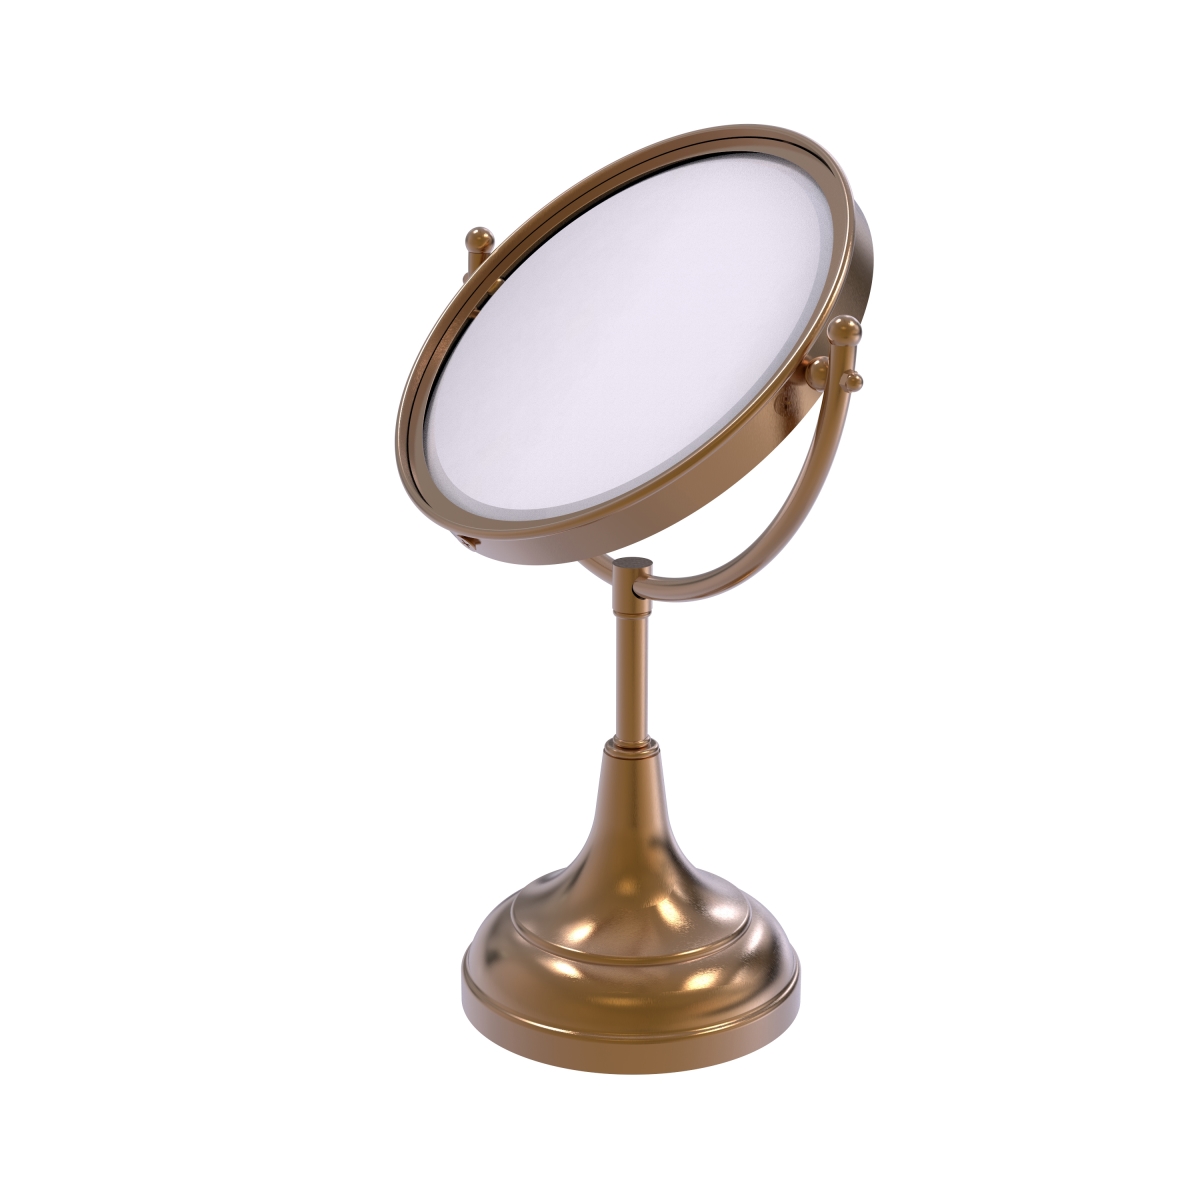 Dm-2-5x-bbr 8 In. Vanity Top Make-up Mirror 5x Magnification, Brushed Bronze